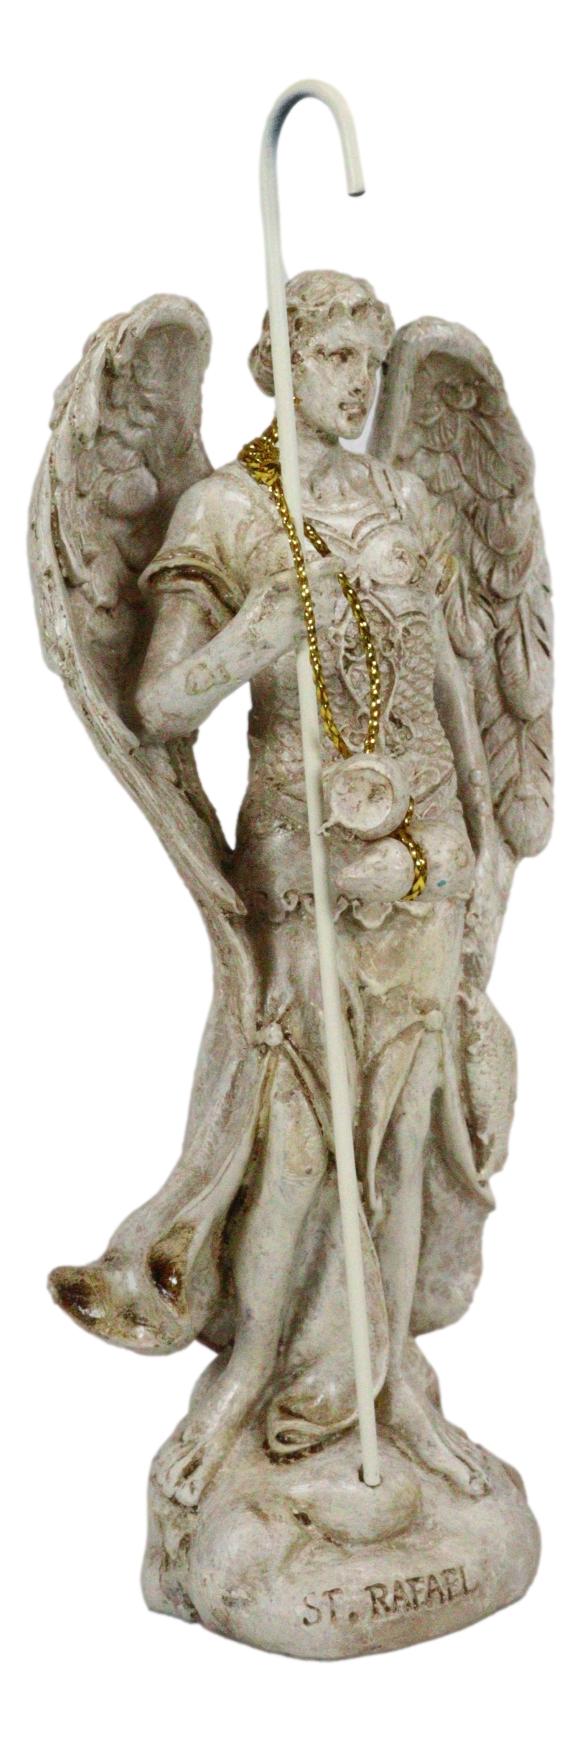 Holy Archangel Saint Raphael Pennance Sacrament Healing Of God Figurine 5" Tall